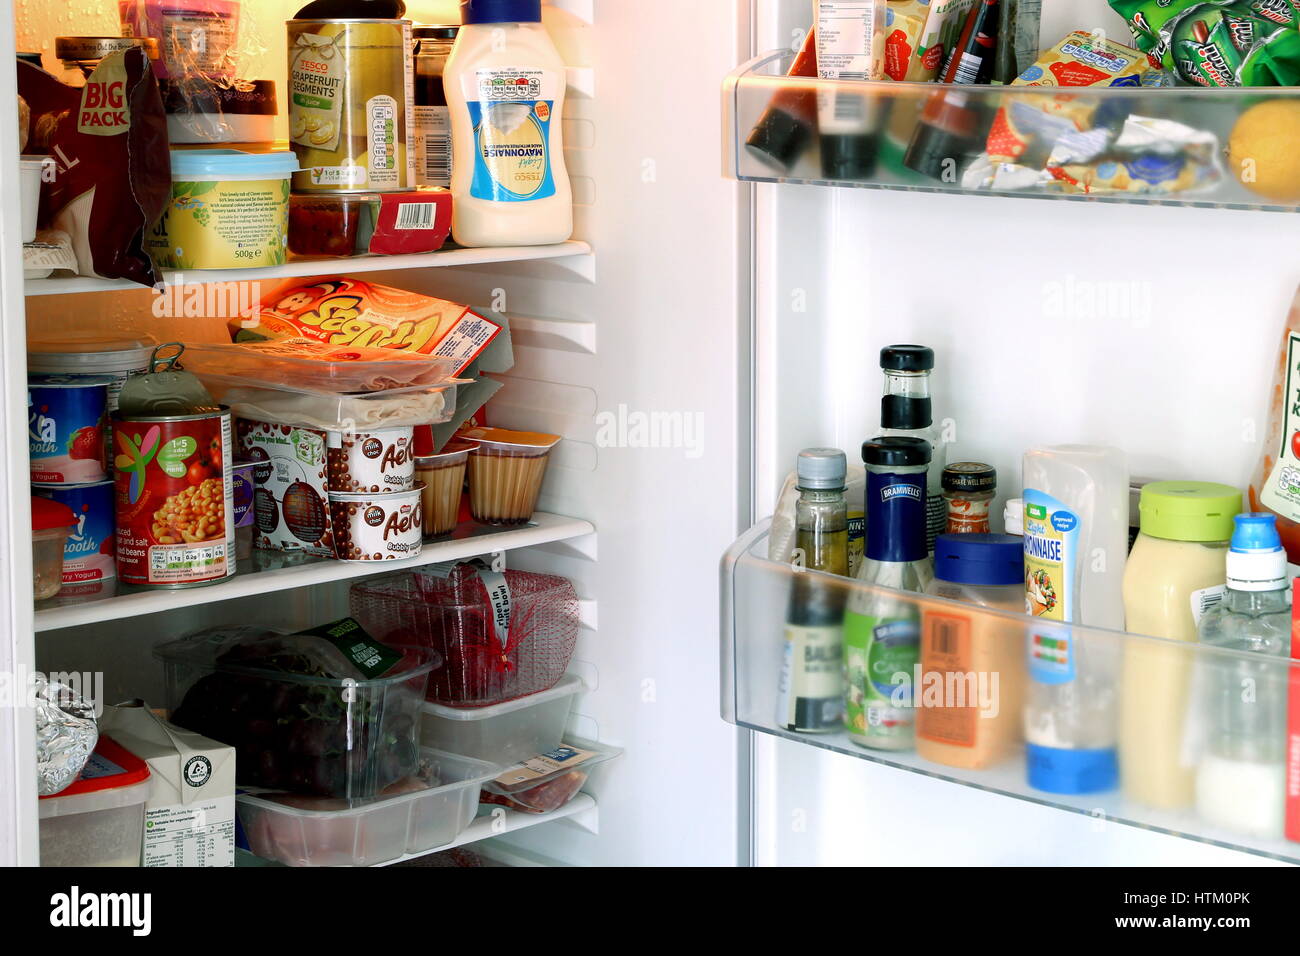 https://c8.alamy.com/comp/HTM0PK/camberley-uk-feb-1st-2017-contents-of-a-packed-domestic-uk-fridge-HTM0PK.jpg